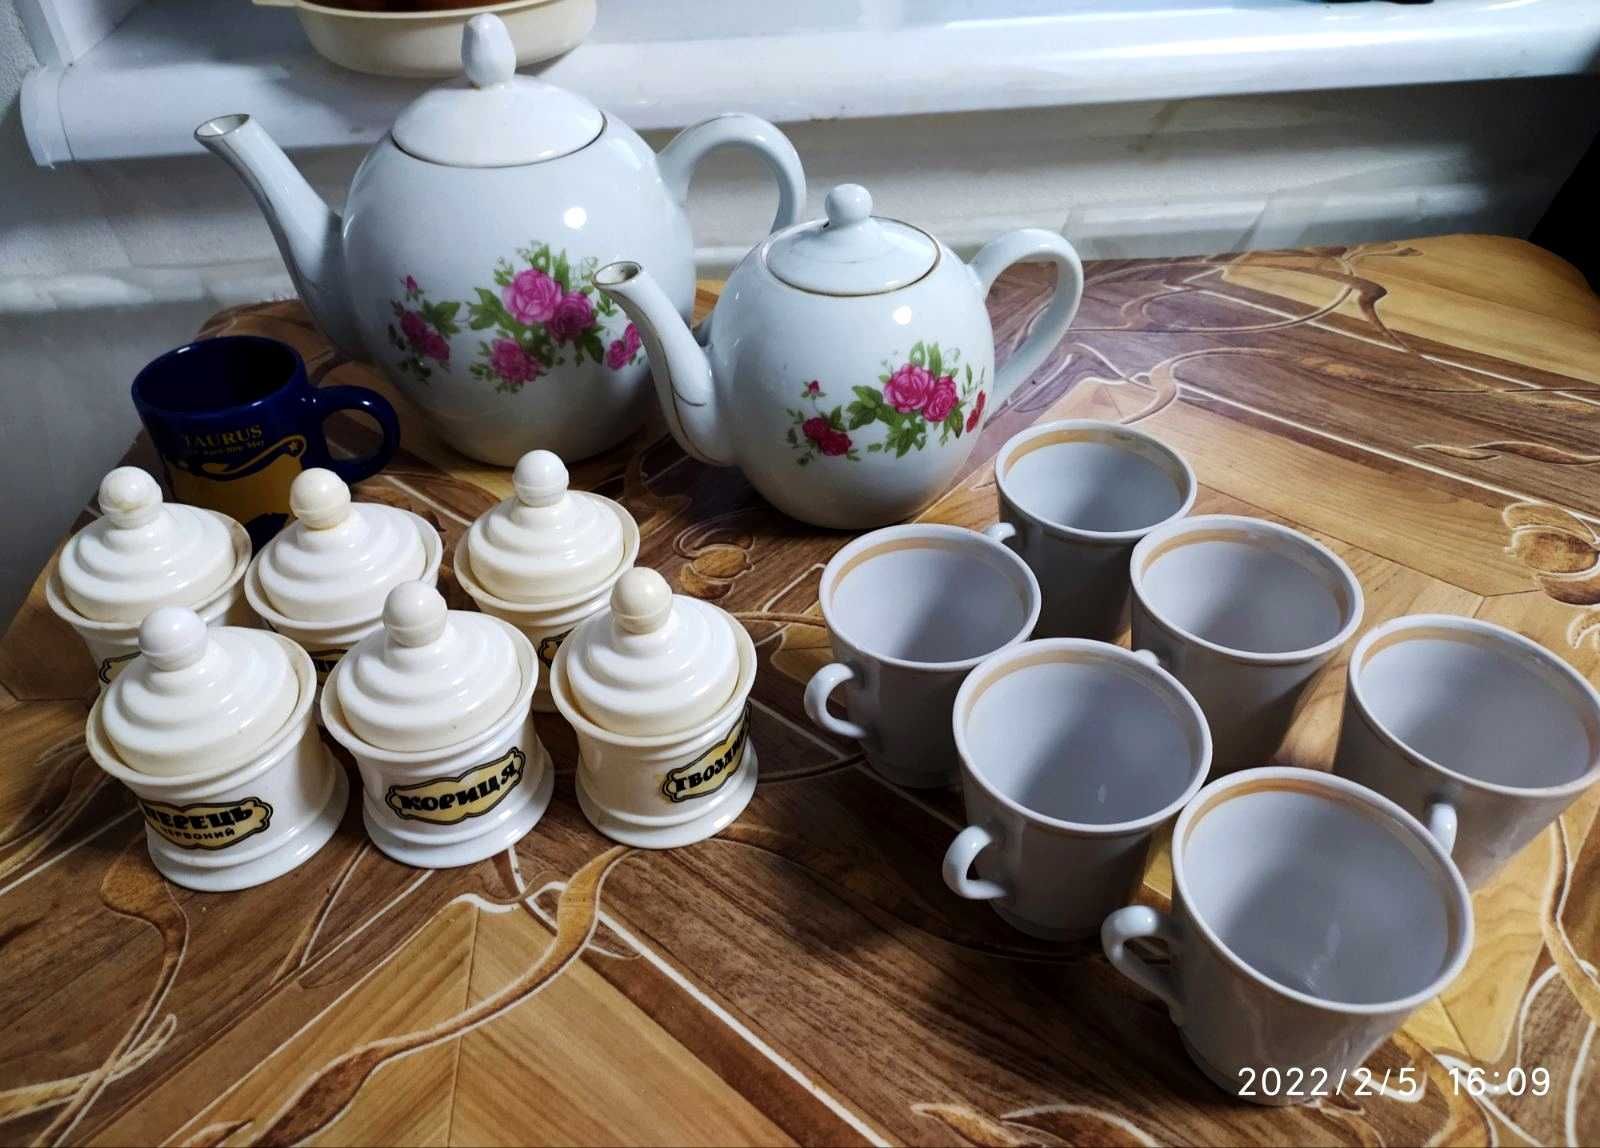 Посуда, фаянс: чайники (Китай), чашки для кофе.